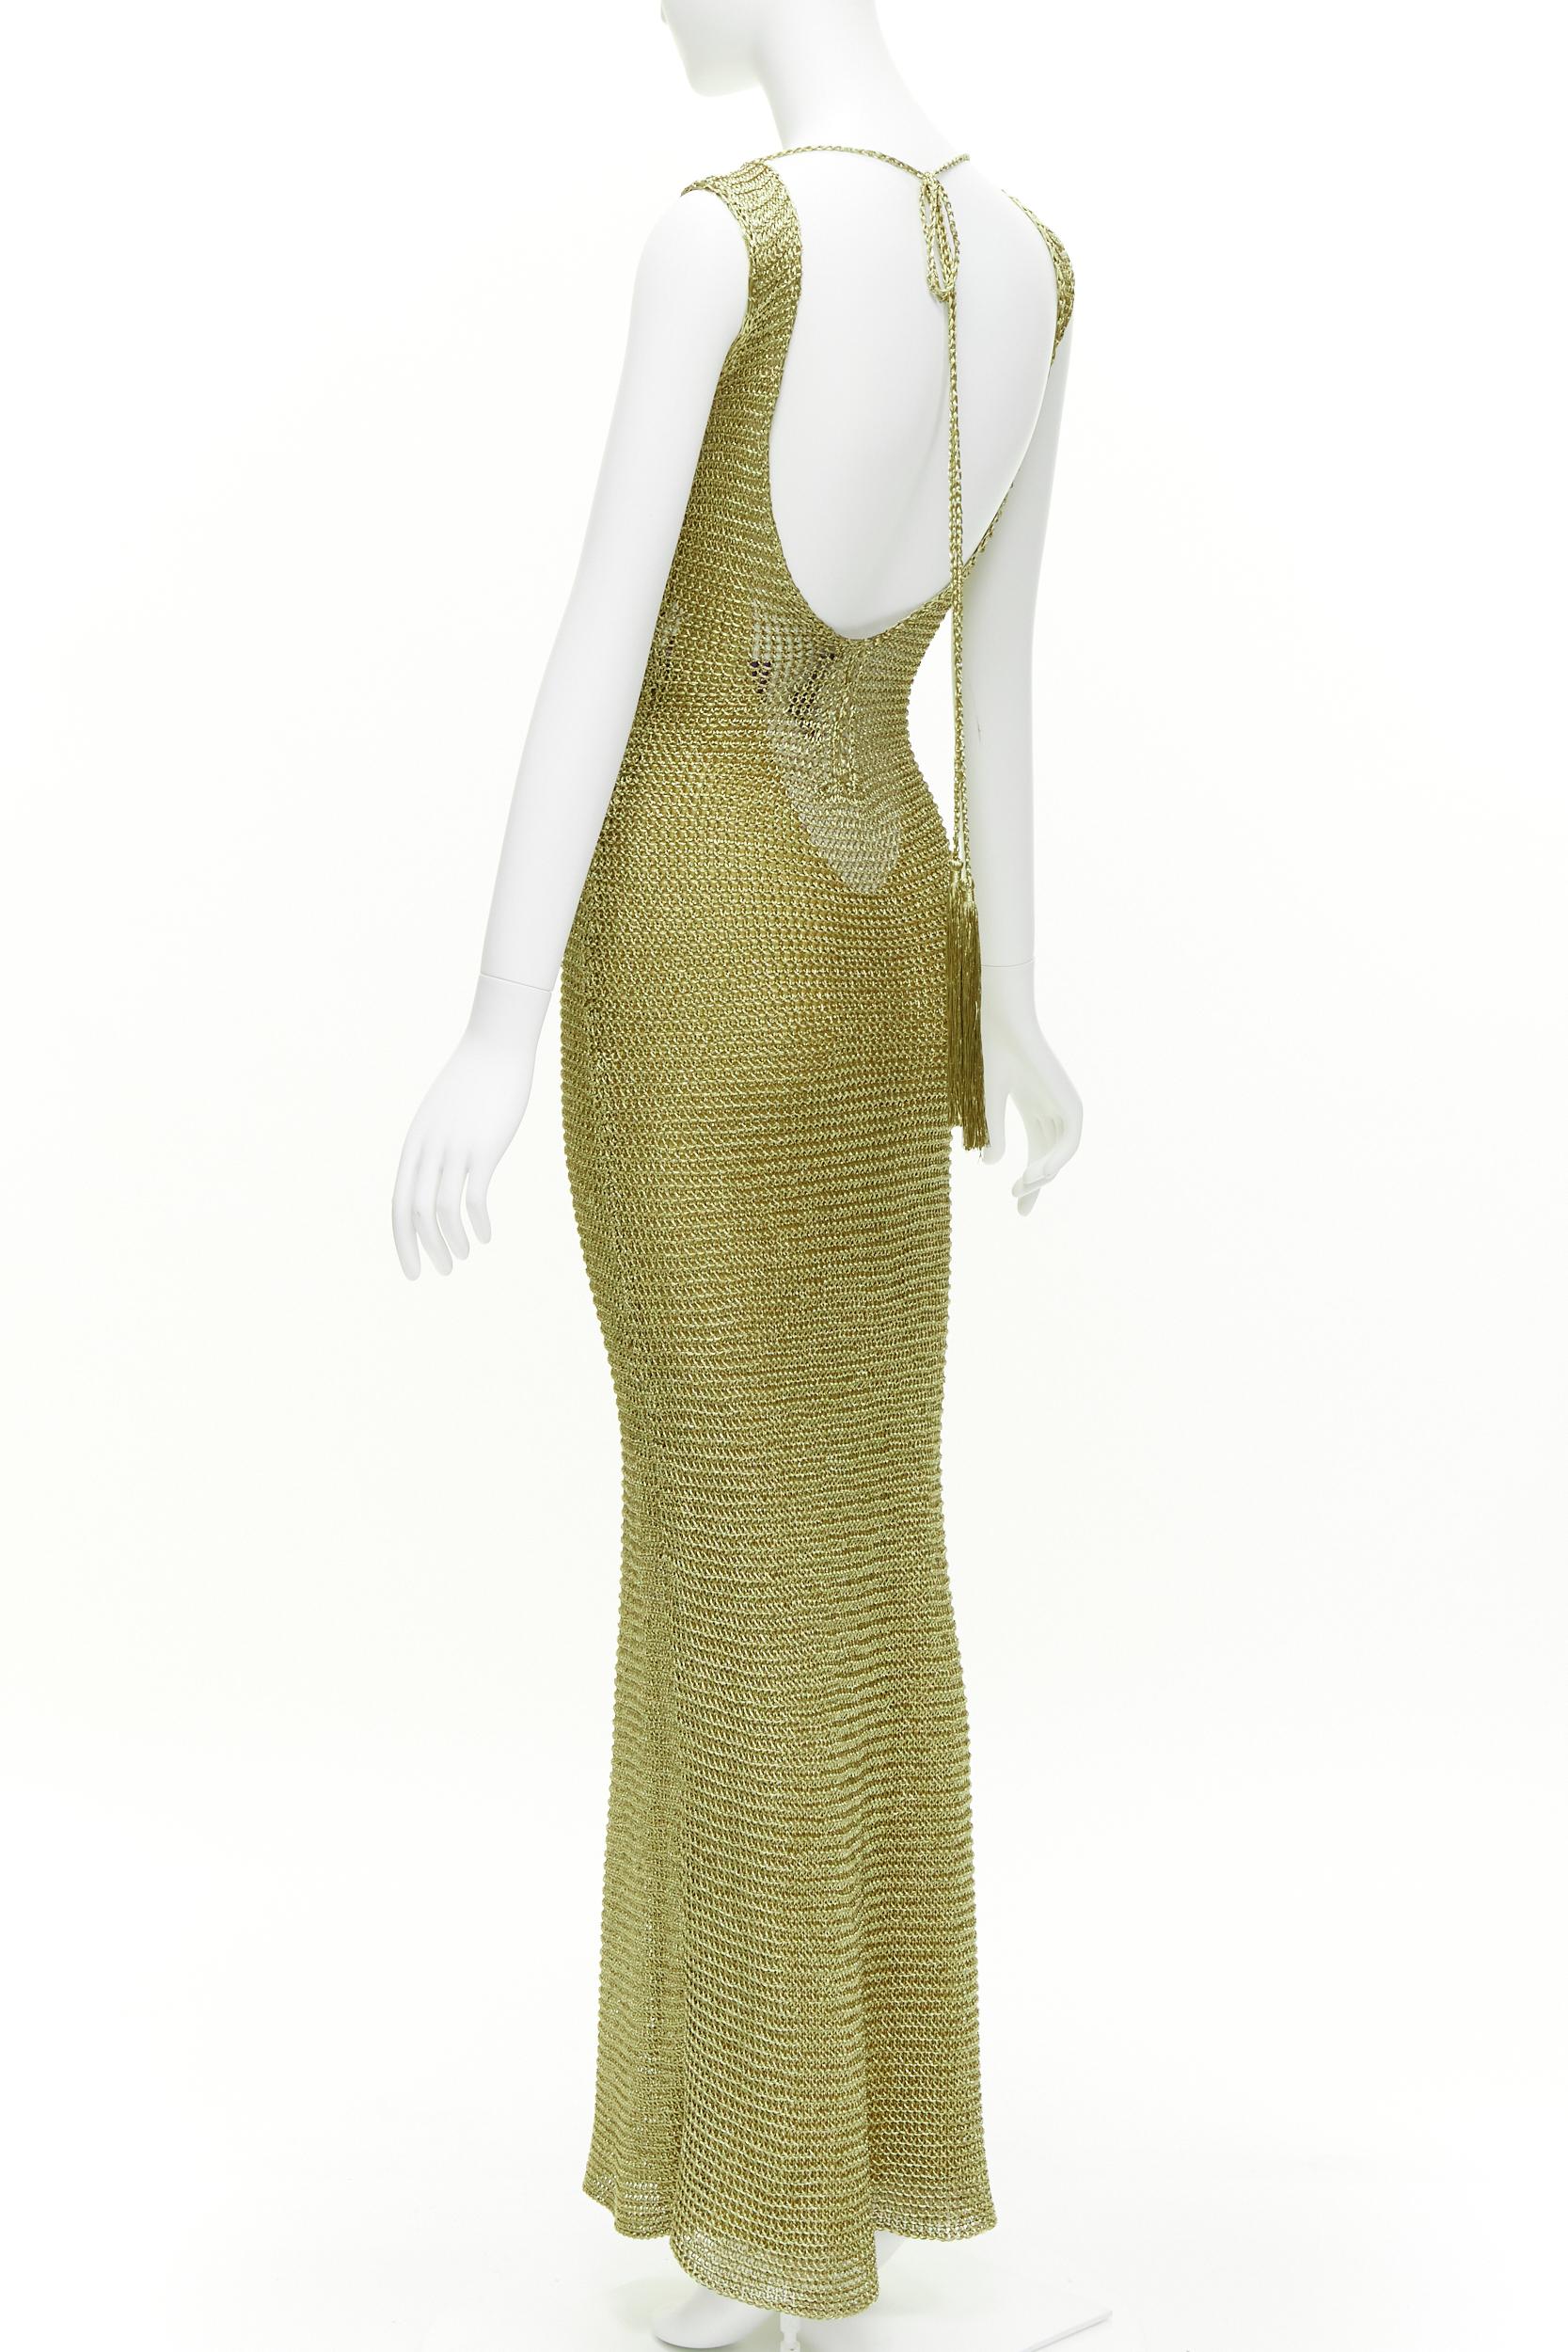 RALPH LAUREN PURPLE LABEL hand knit gold tassel crochet midi evening gown dress  For Sale 2